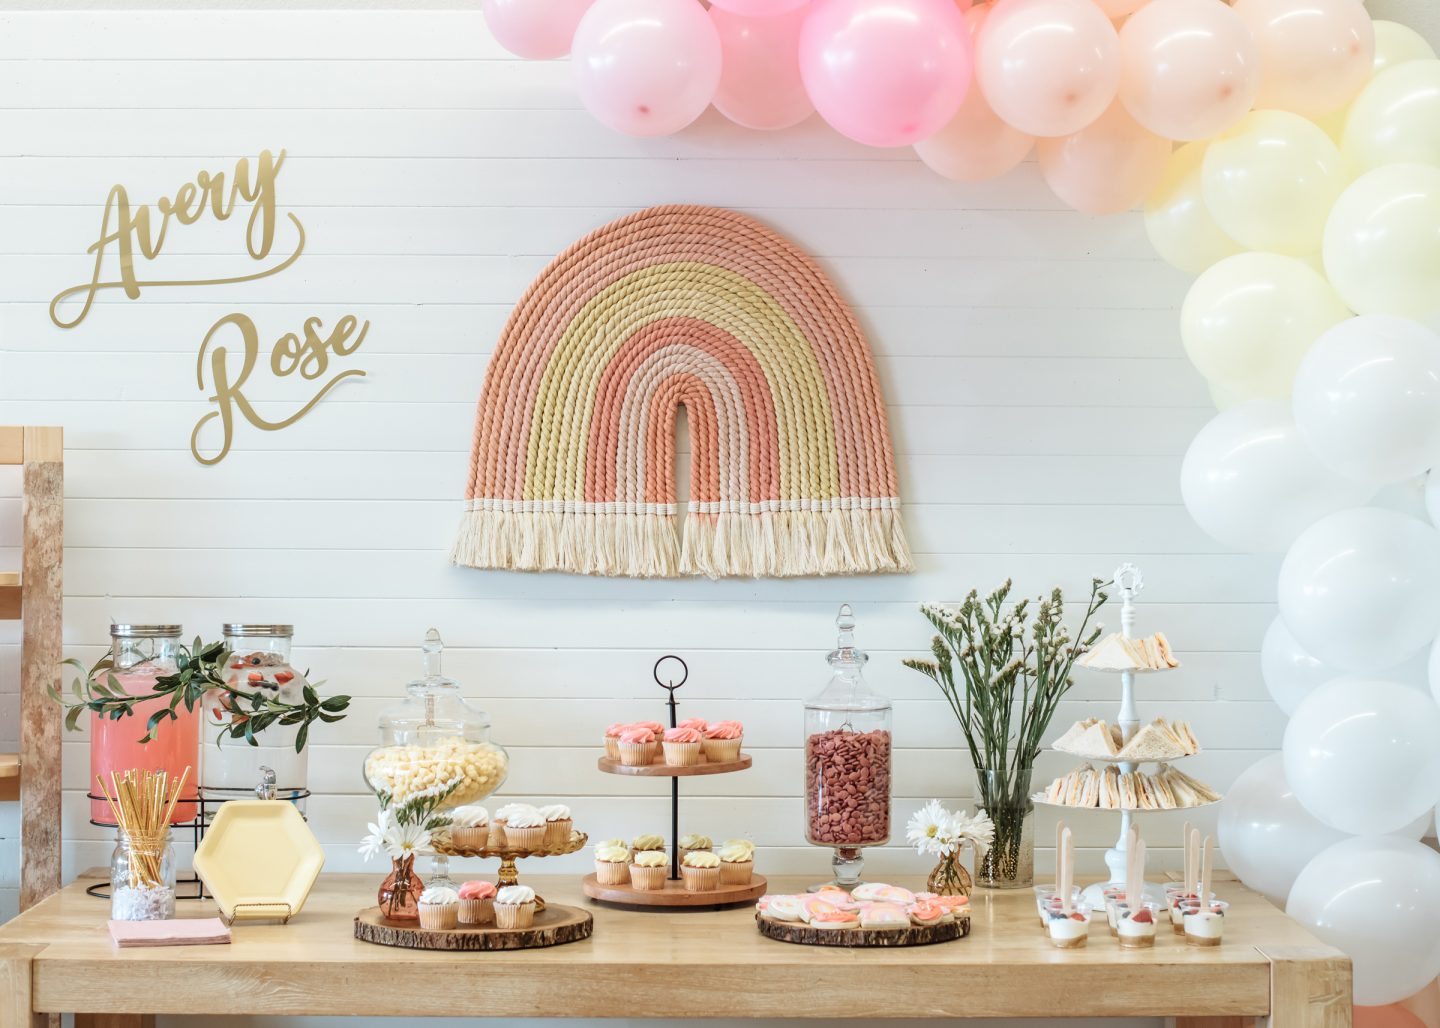 Avery's 3rd Birthday Party – Hello Ivory Rose